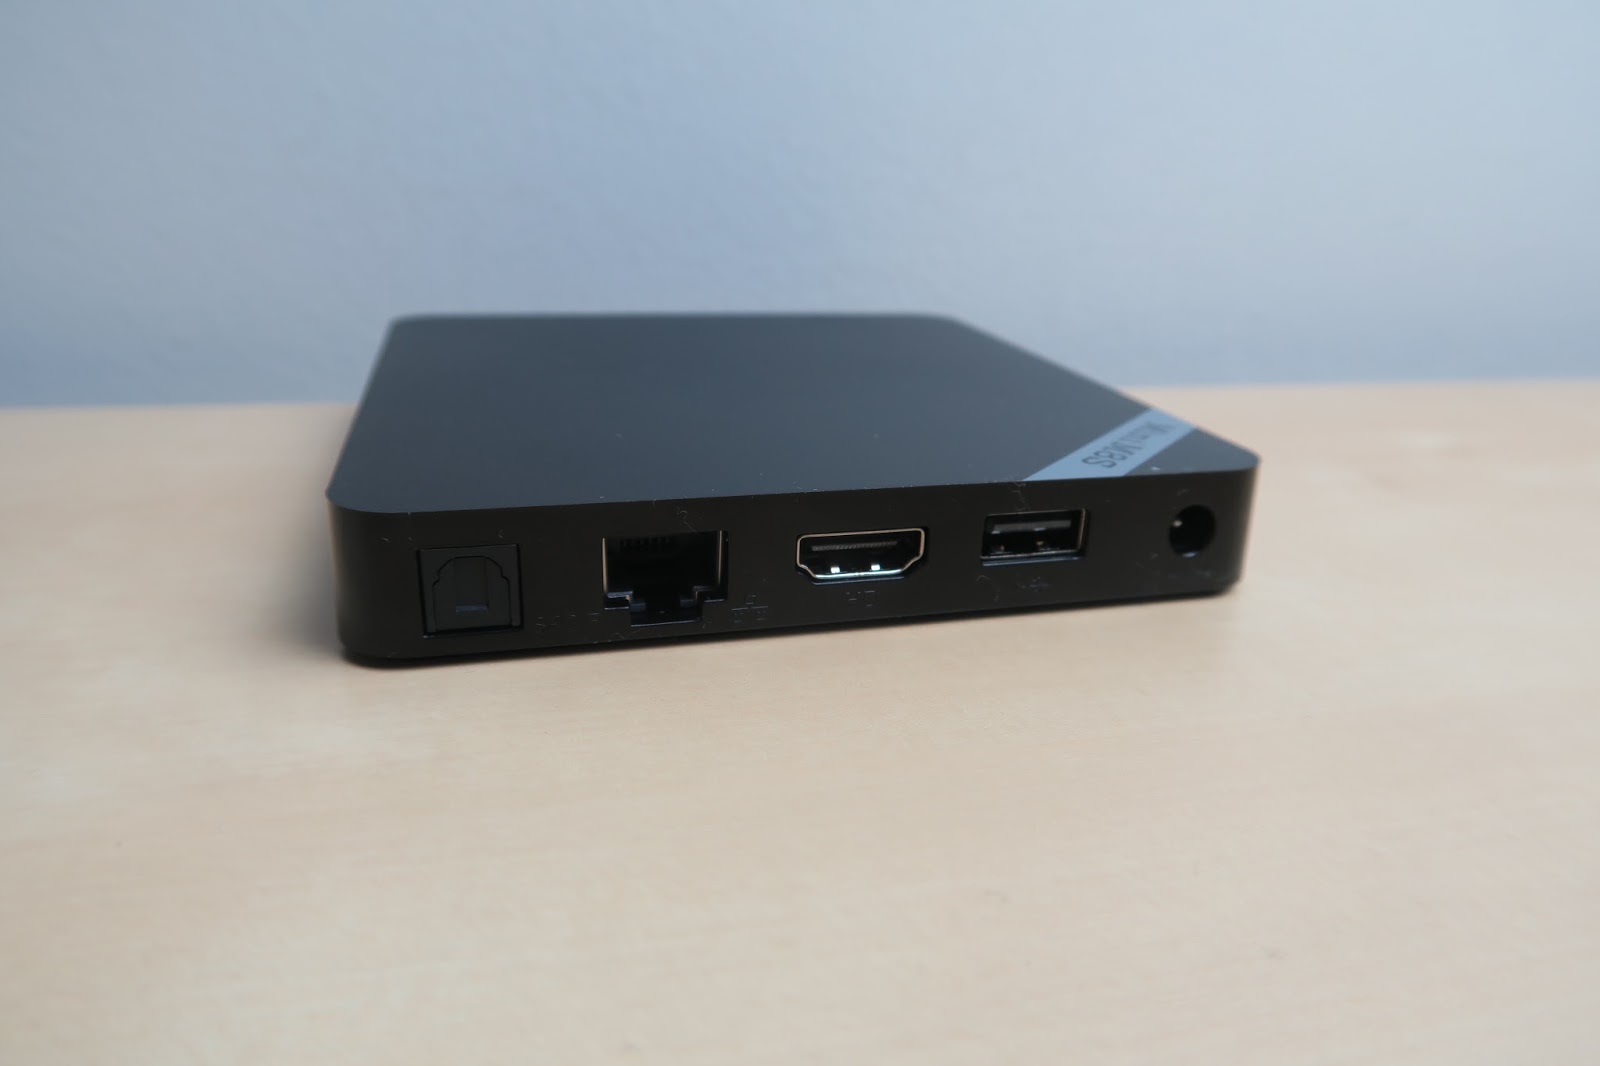 Mini M8S Tv Box REVIEW - Amlogic S905, 2GB RAM, Android 5.1 